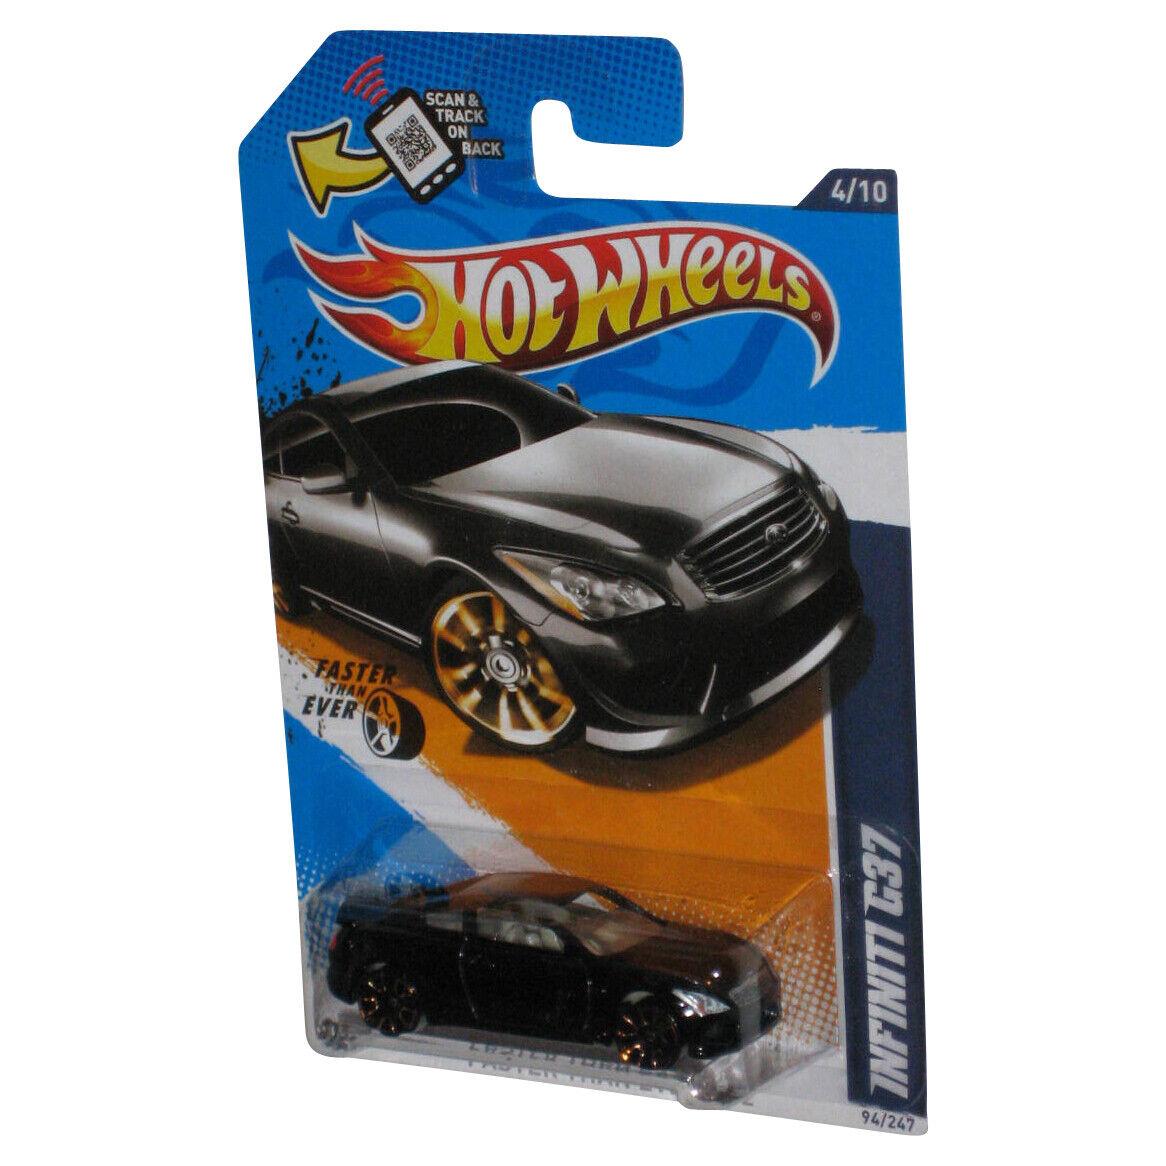 Hot Wheels Faster Than Ever `12 4/10 Black Infiniti G37 Toy Car 94/247